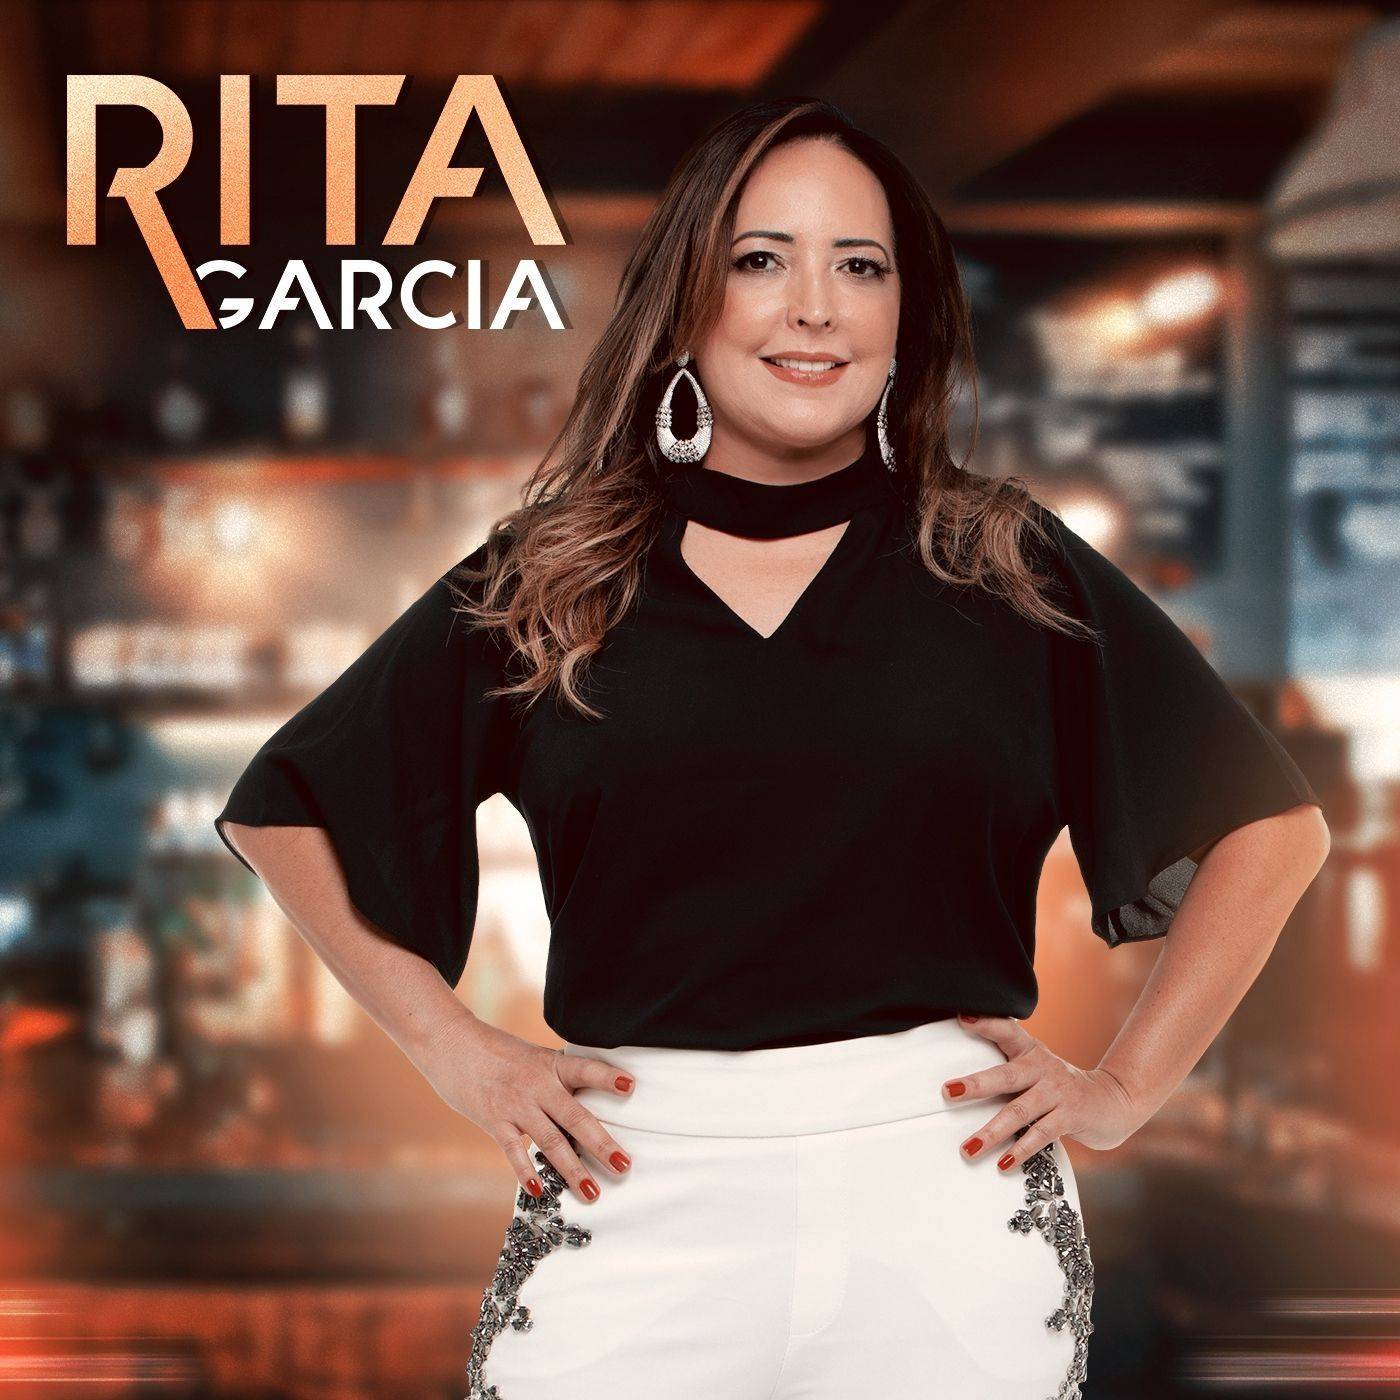 Rita Garcia